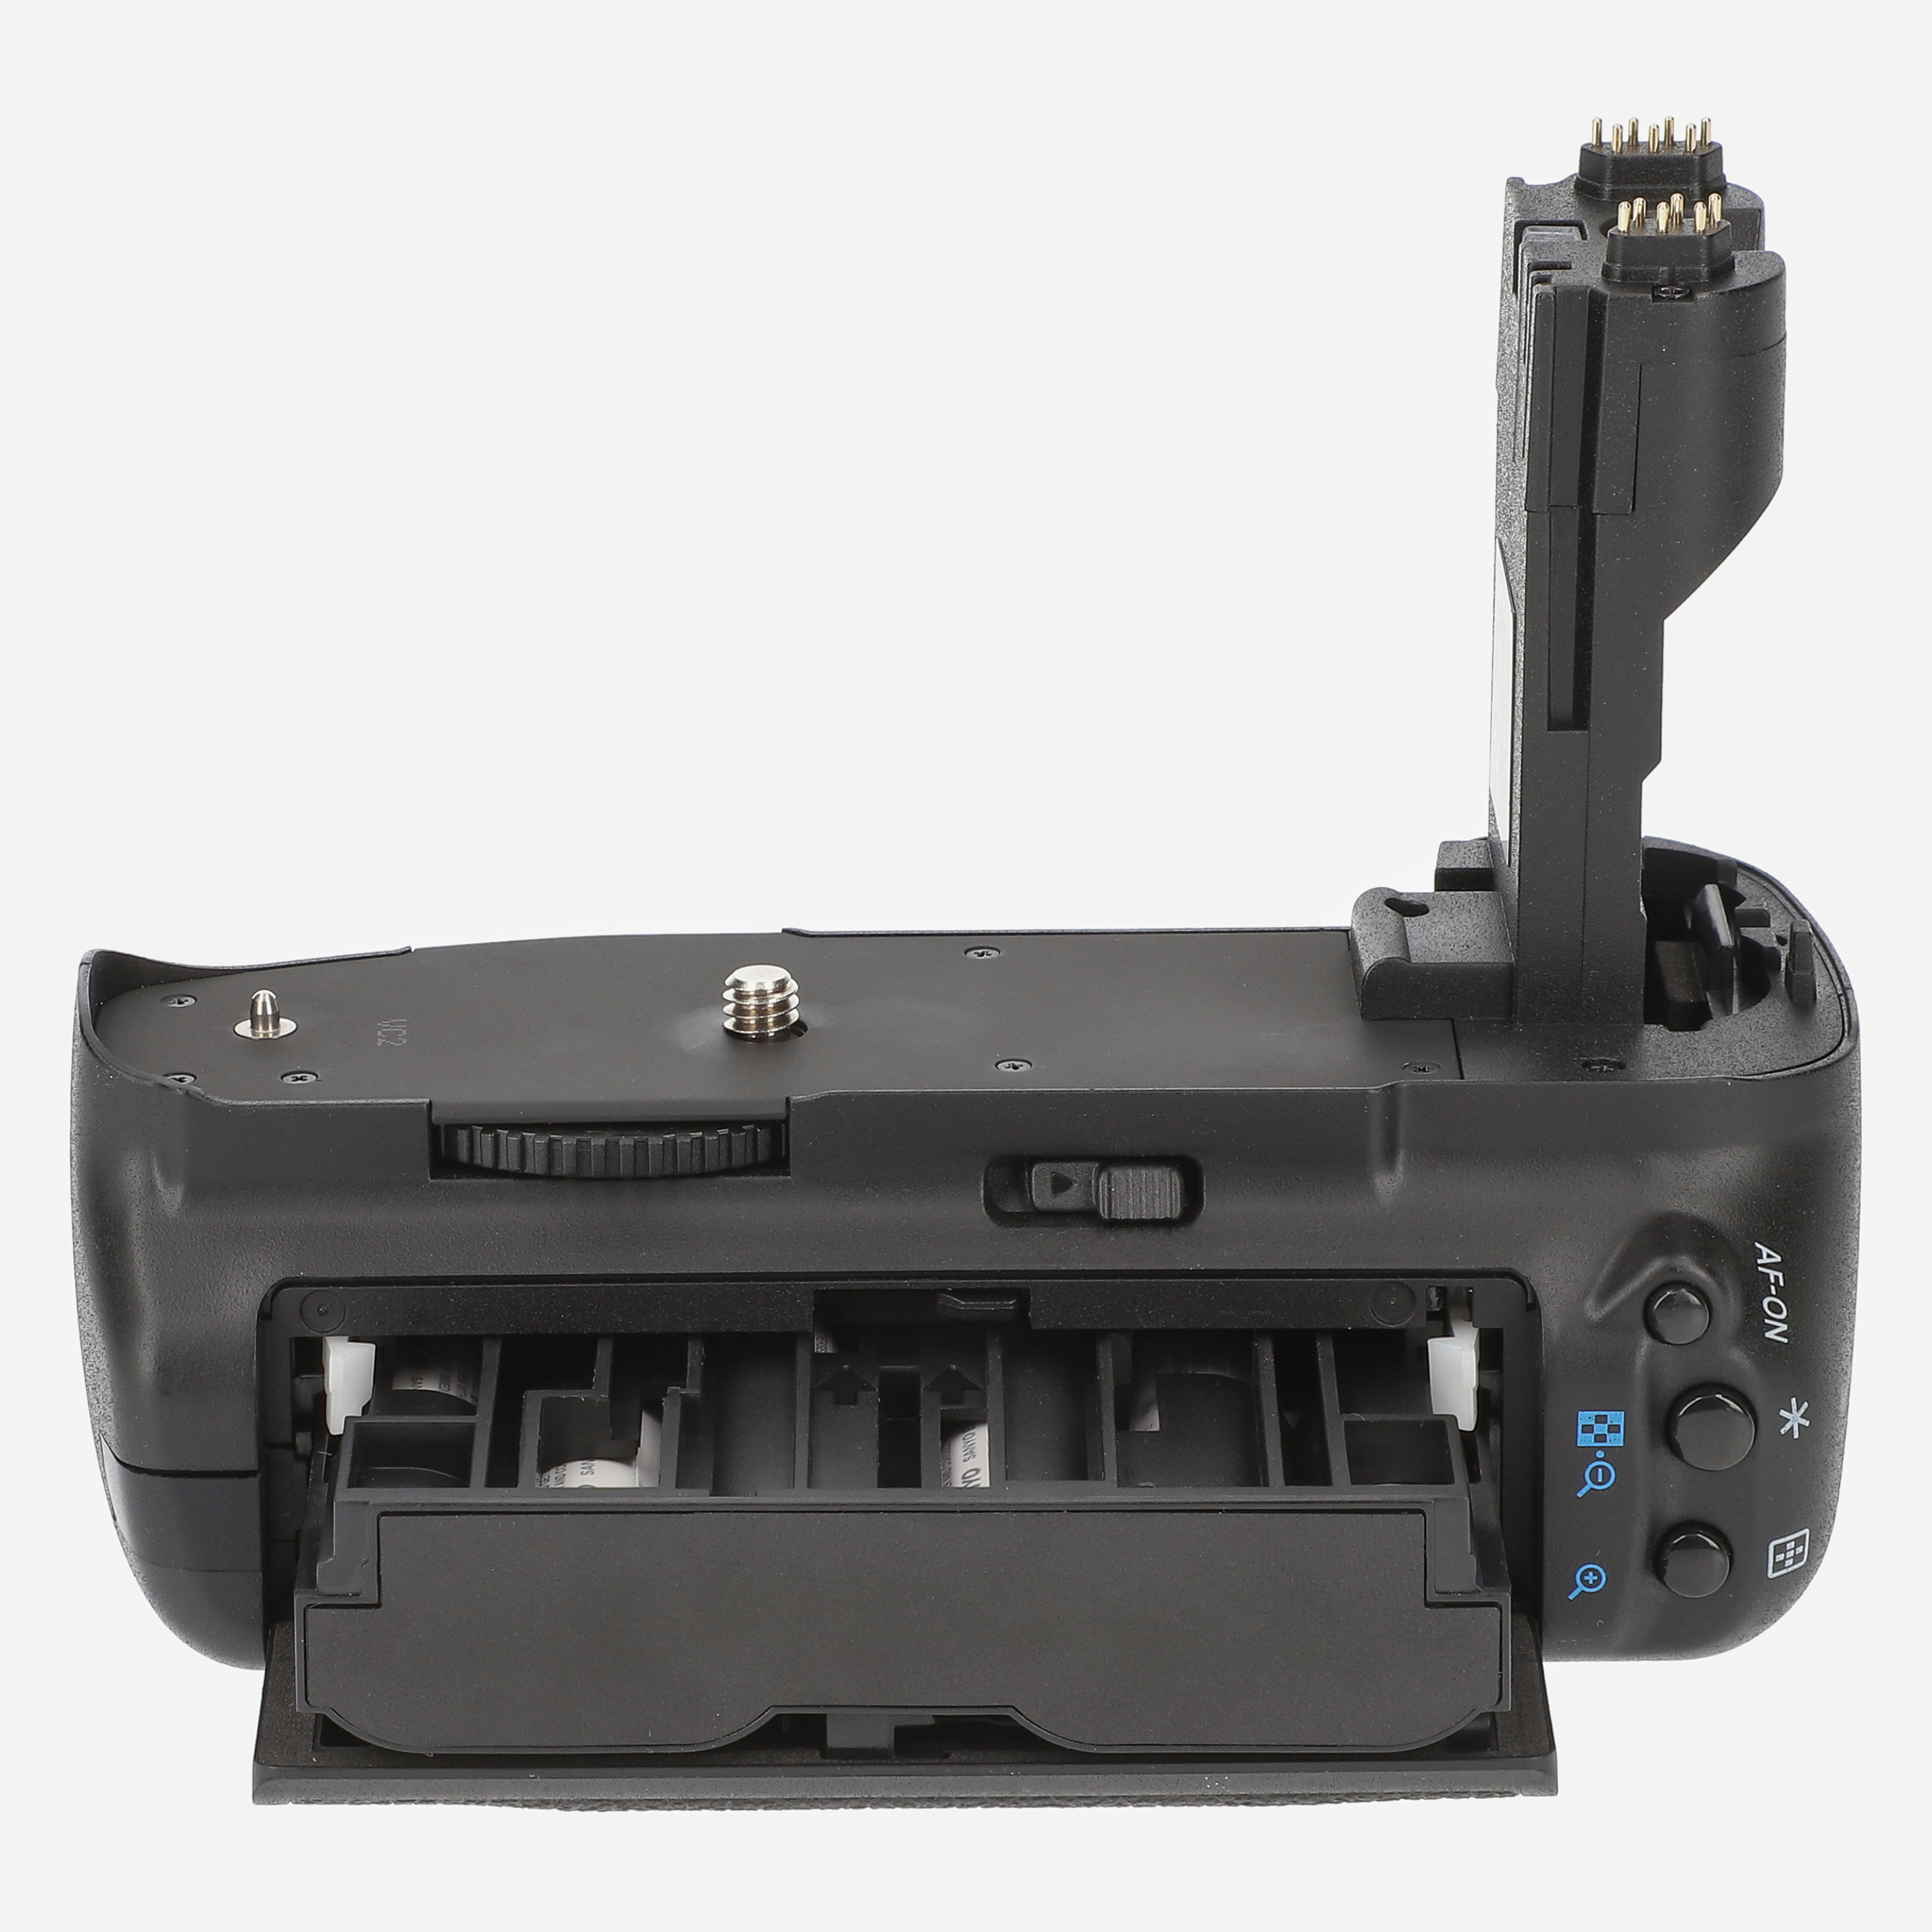 ayex Batteriegriff Set für Canon EOS 7D wie BG-E7 + 2x LP-E6N Akku Hochformatgriff Akkugriff